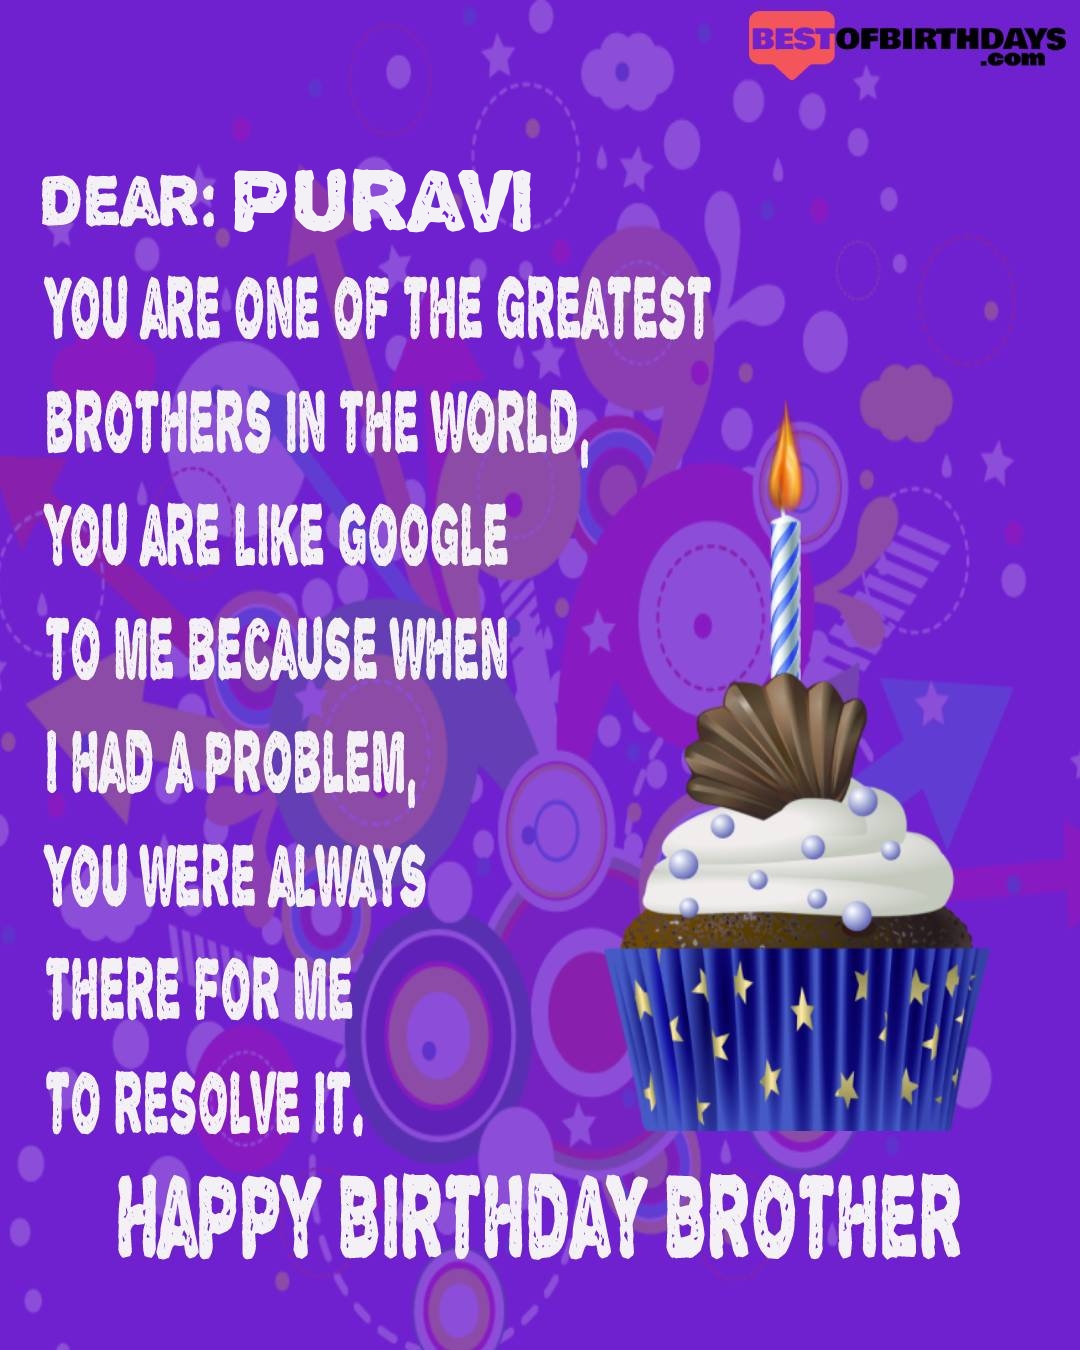 Happy birthday puravi bhai brother bro